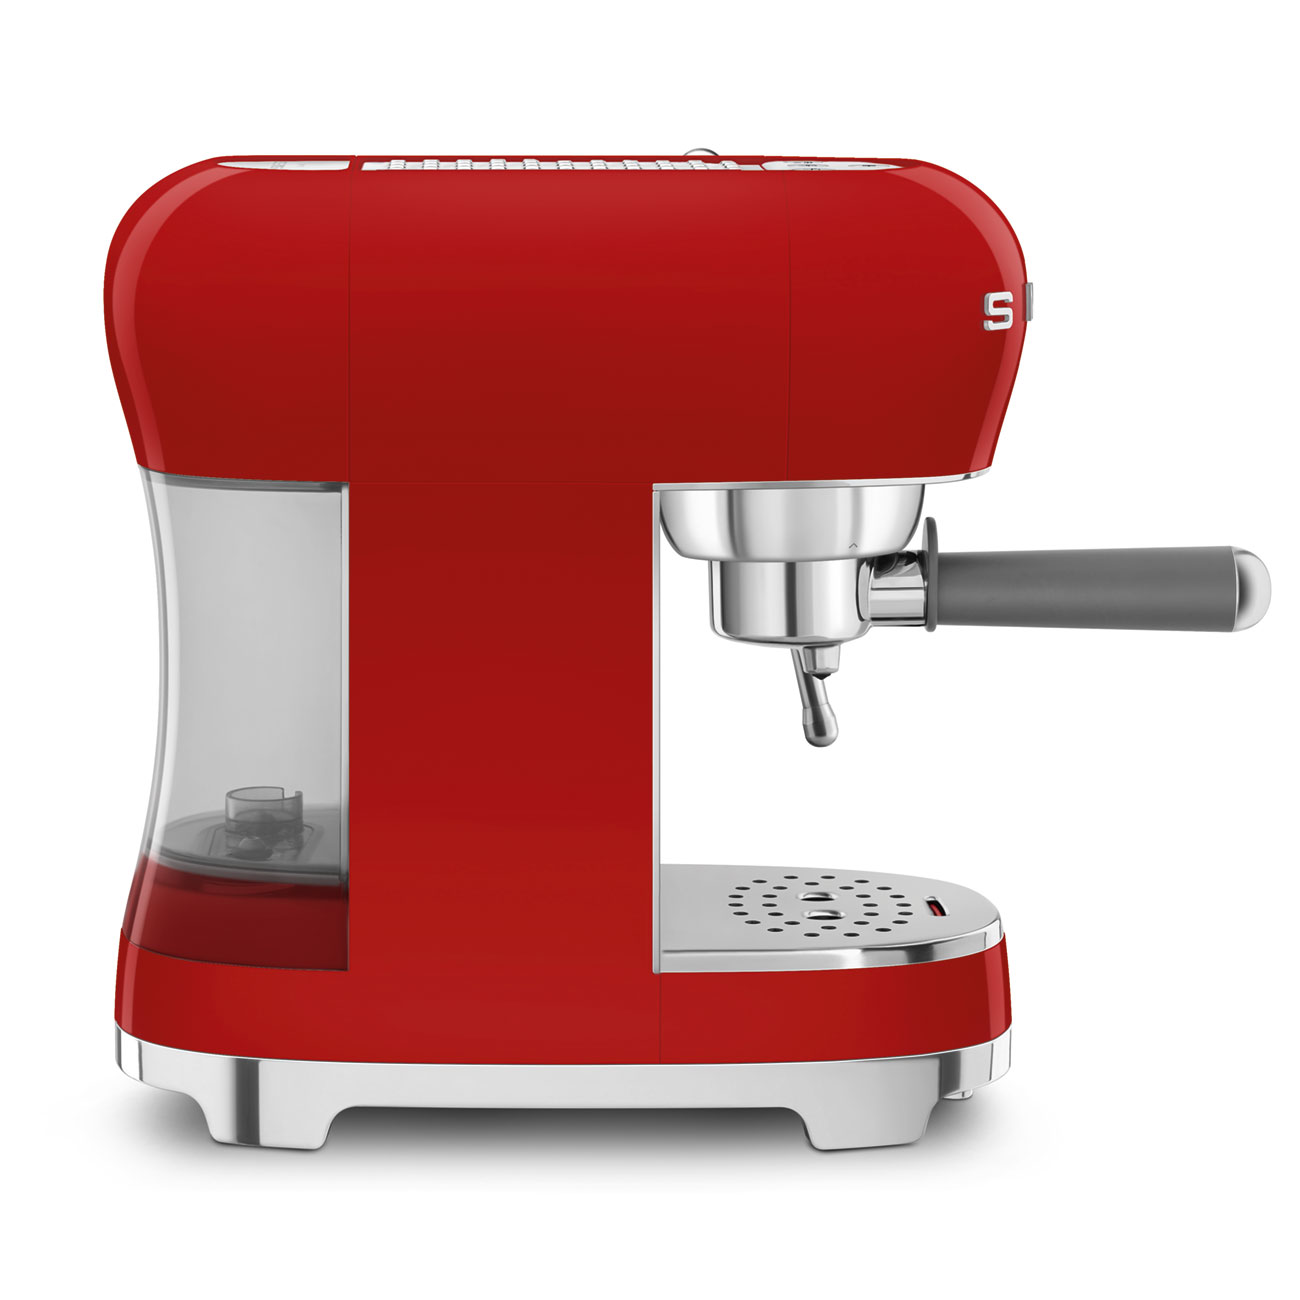 Smeg Red Espresso Manual Coffee Machine with Steam Wand_7